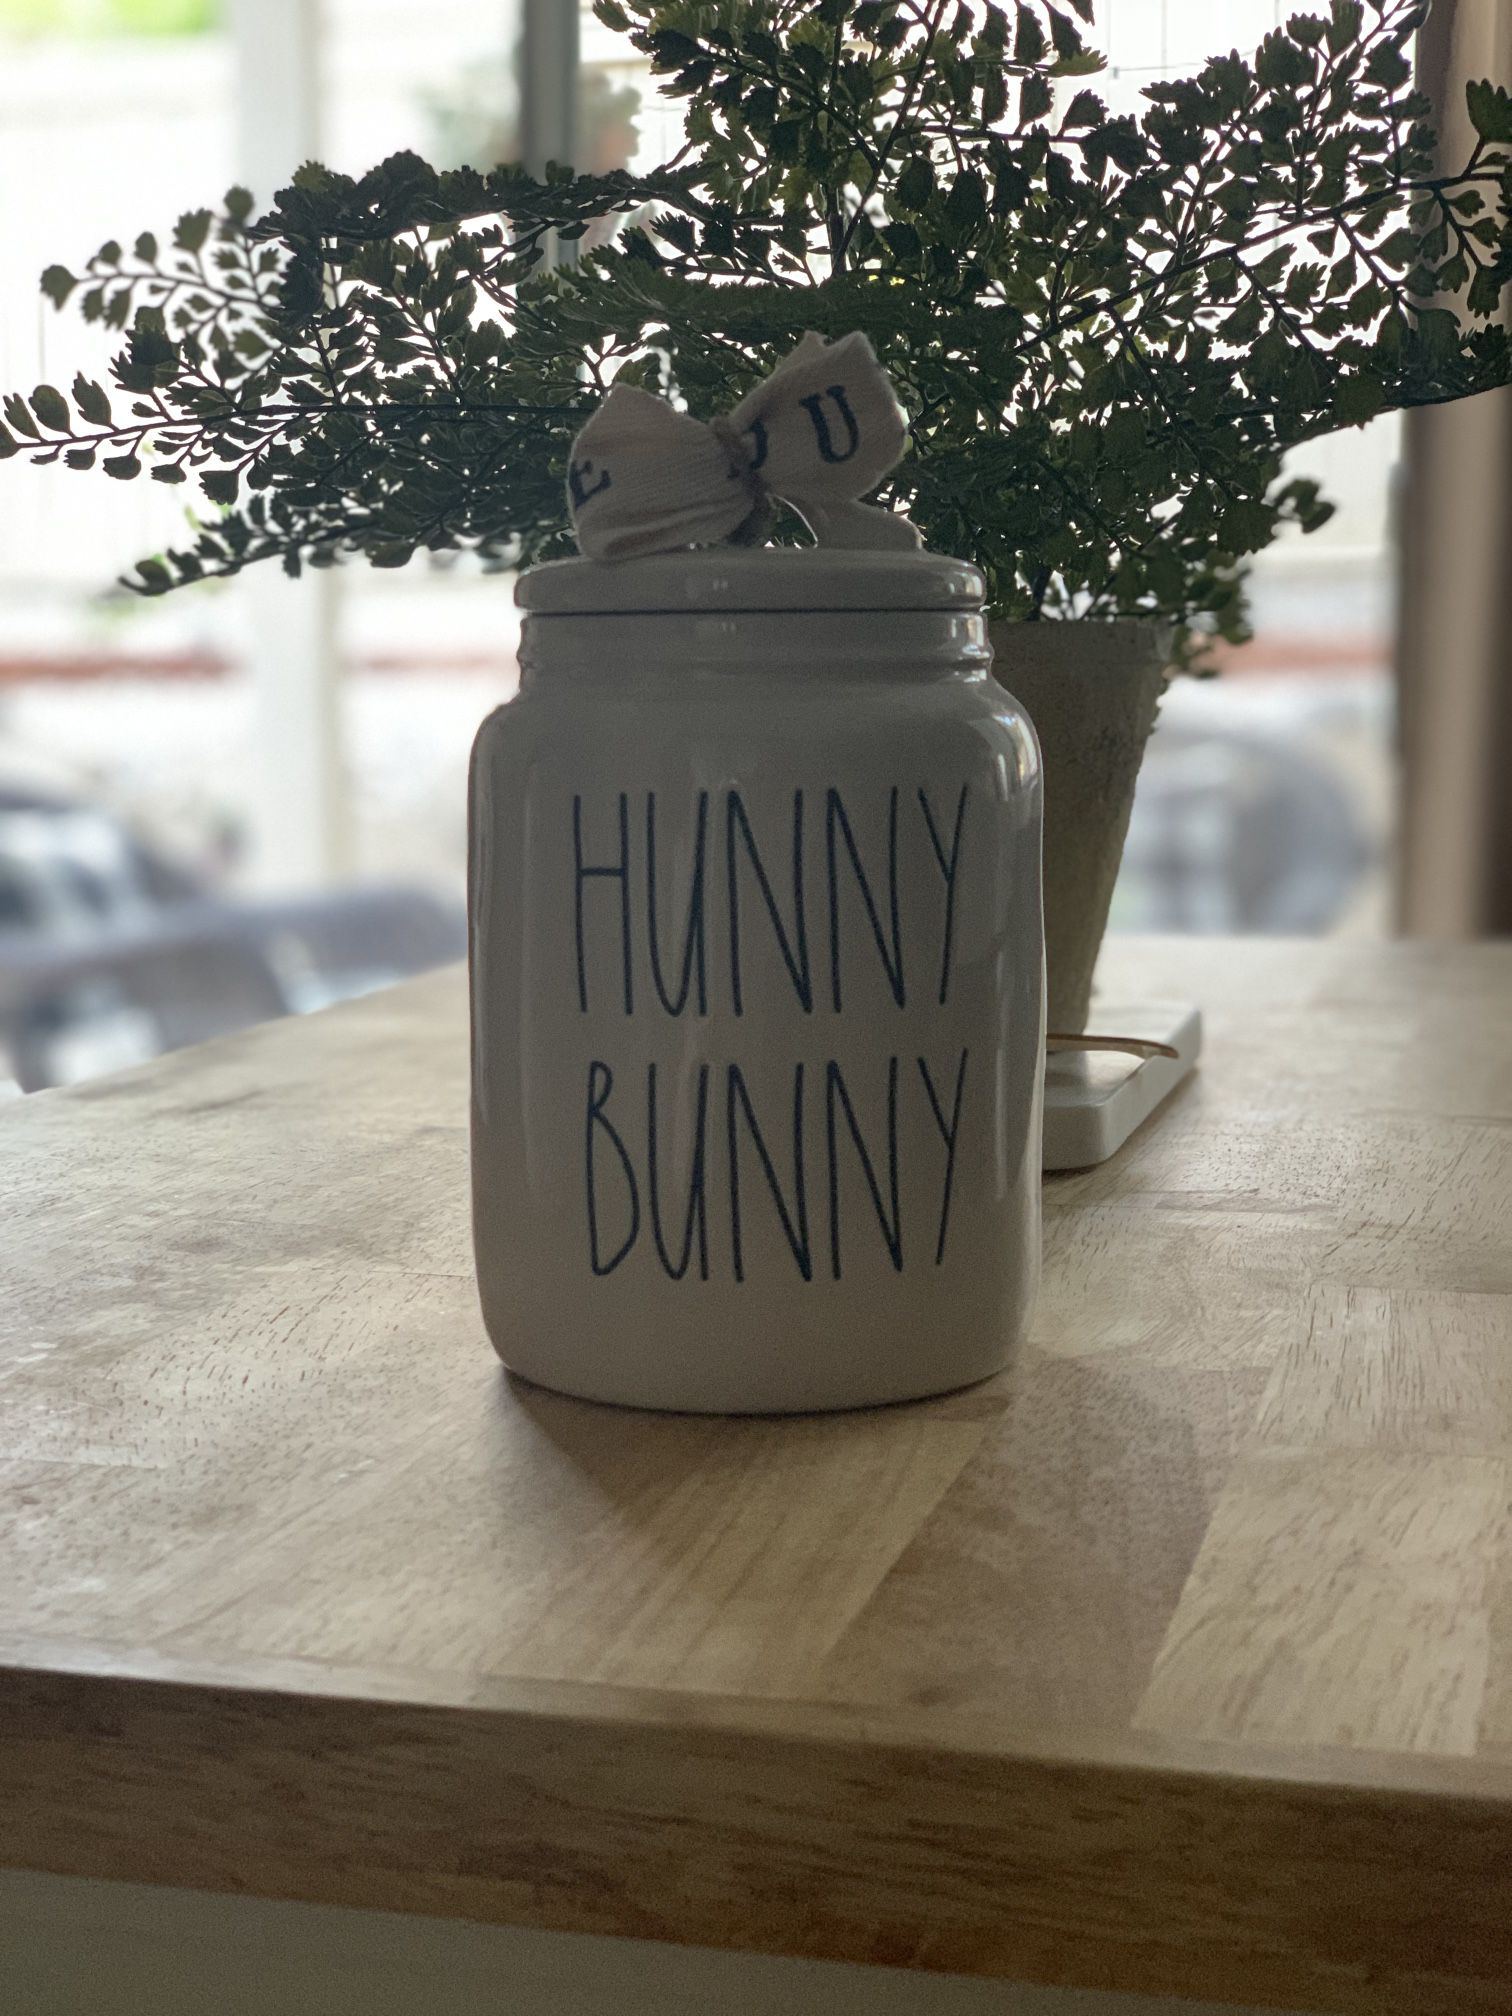 Rae Dunn Baby Hunny Bunny 